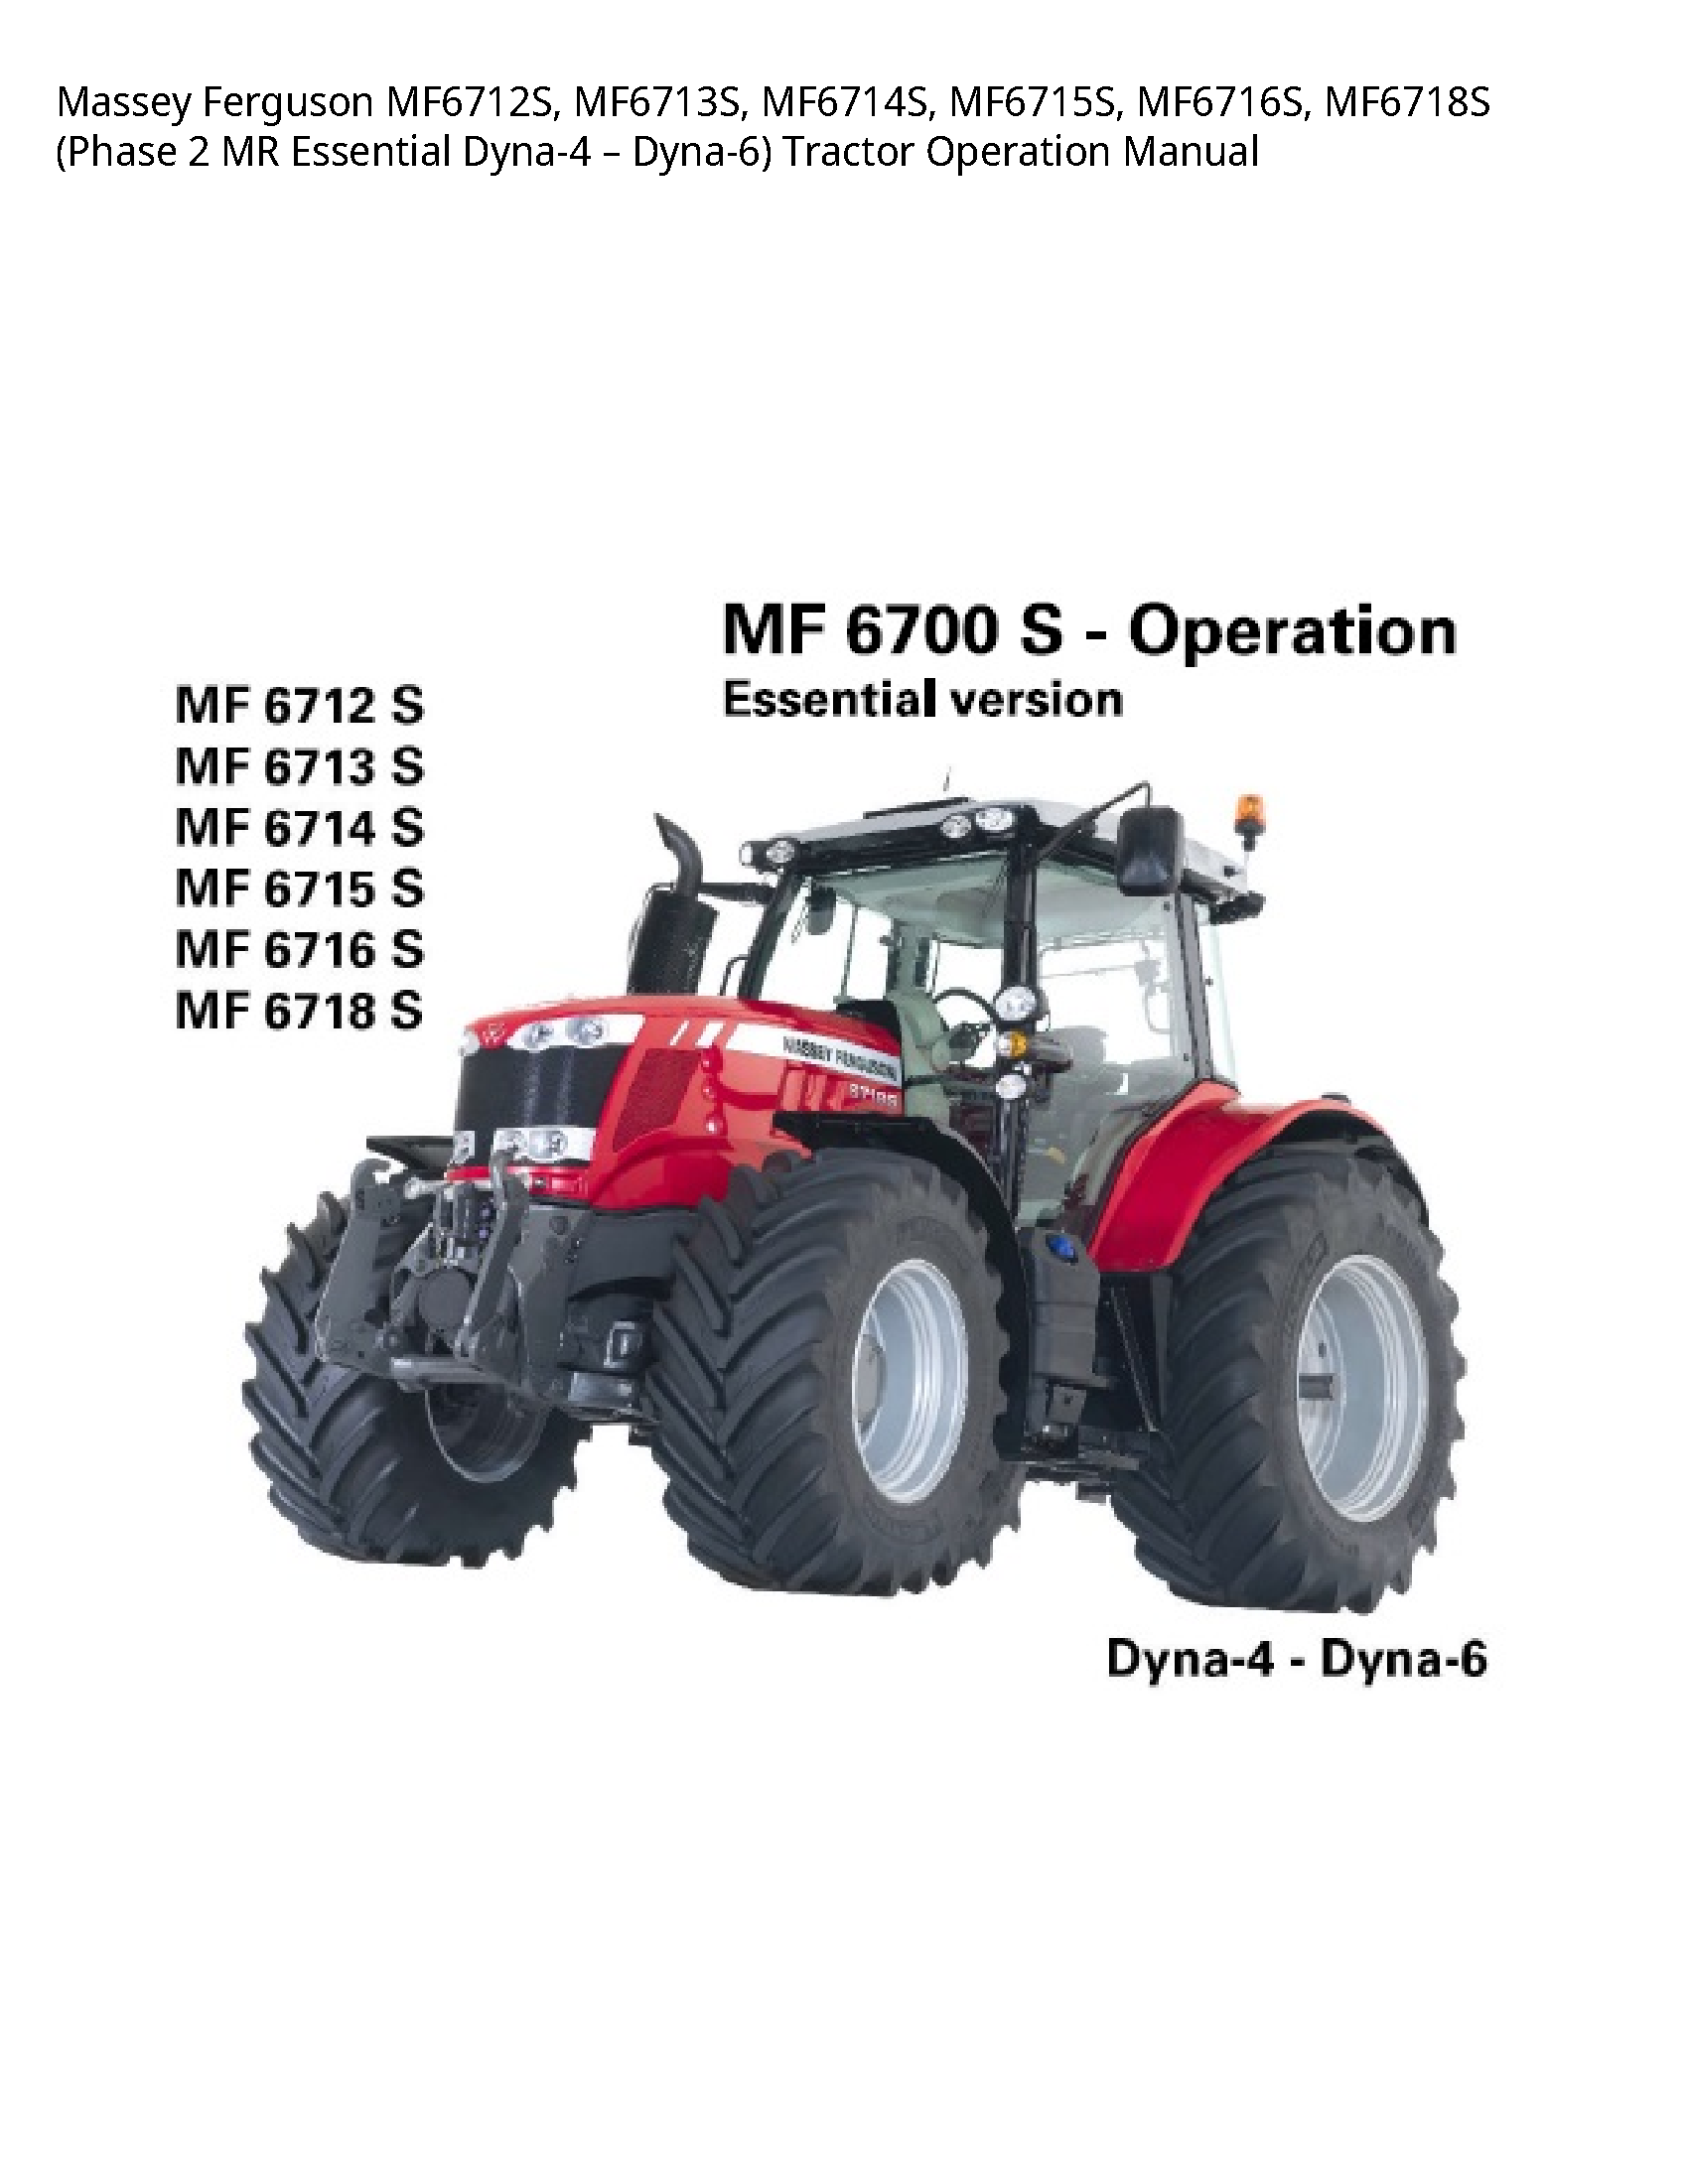 Massey Ferguson MF6712S (Phase MR Essential Tractor Operation manual